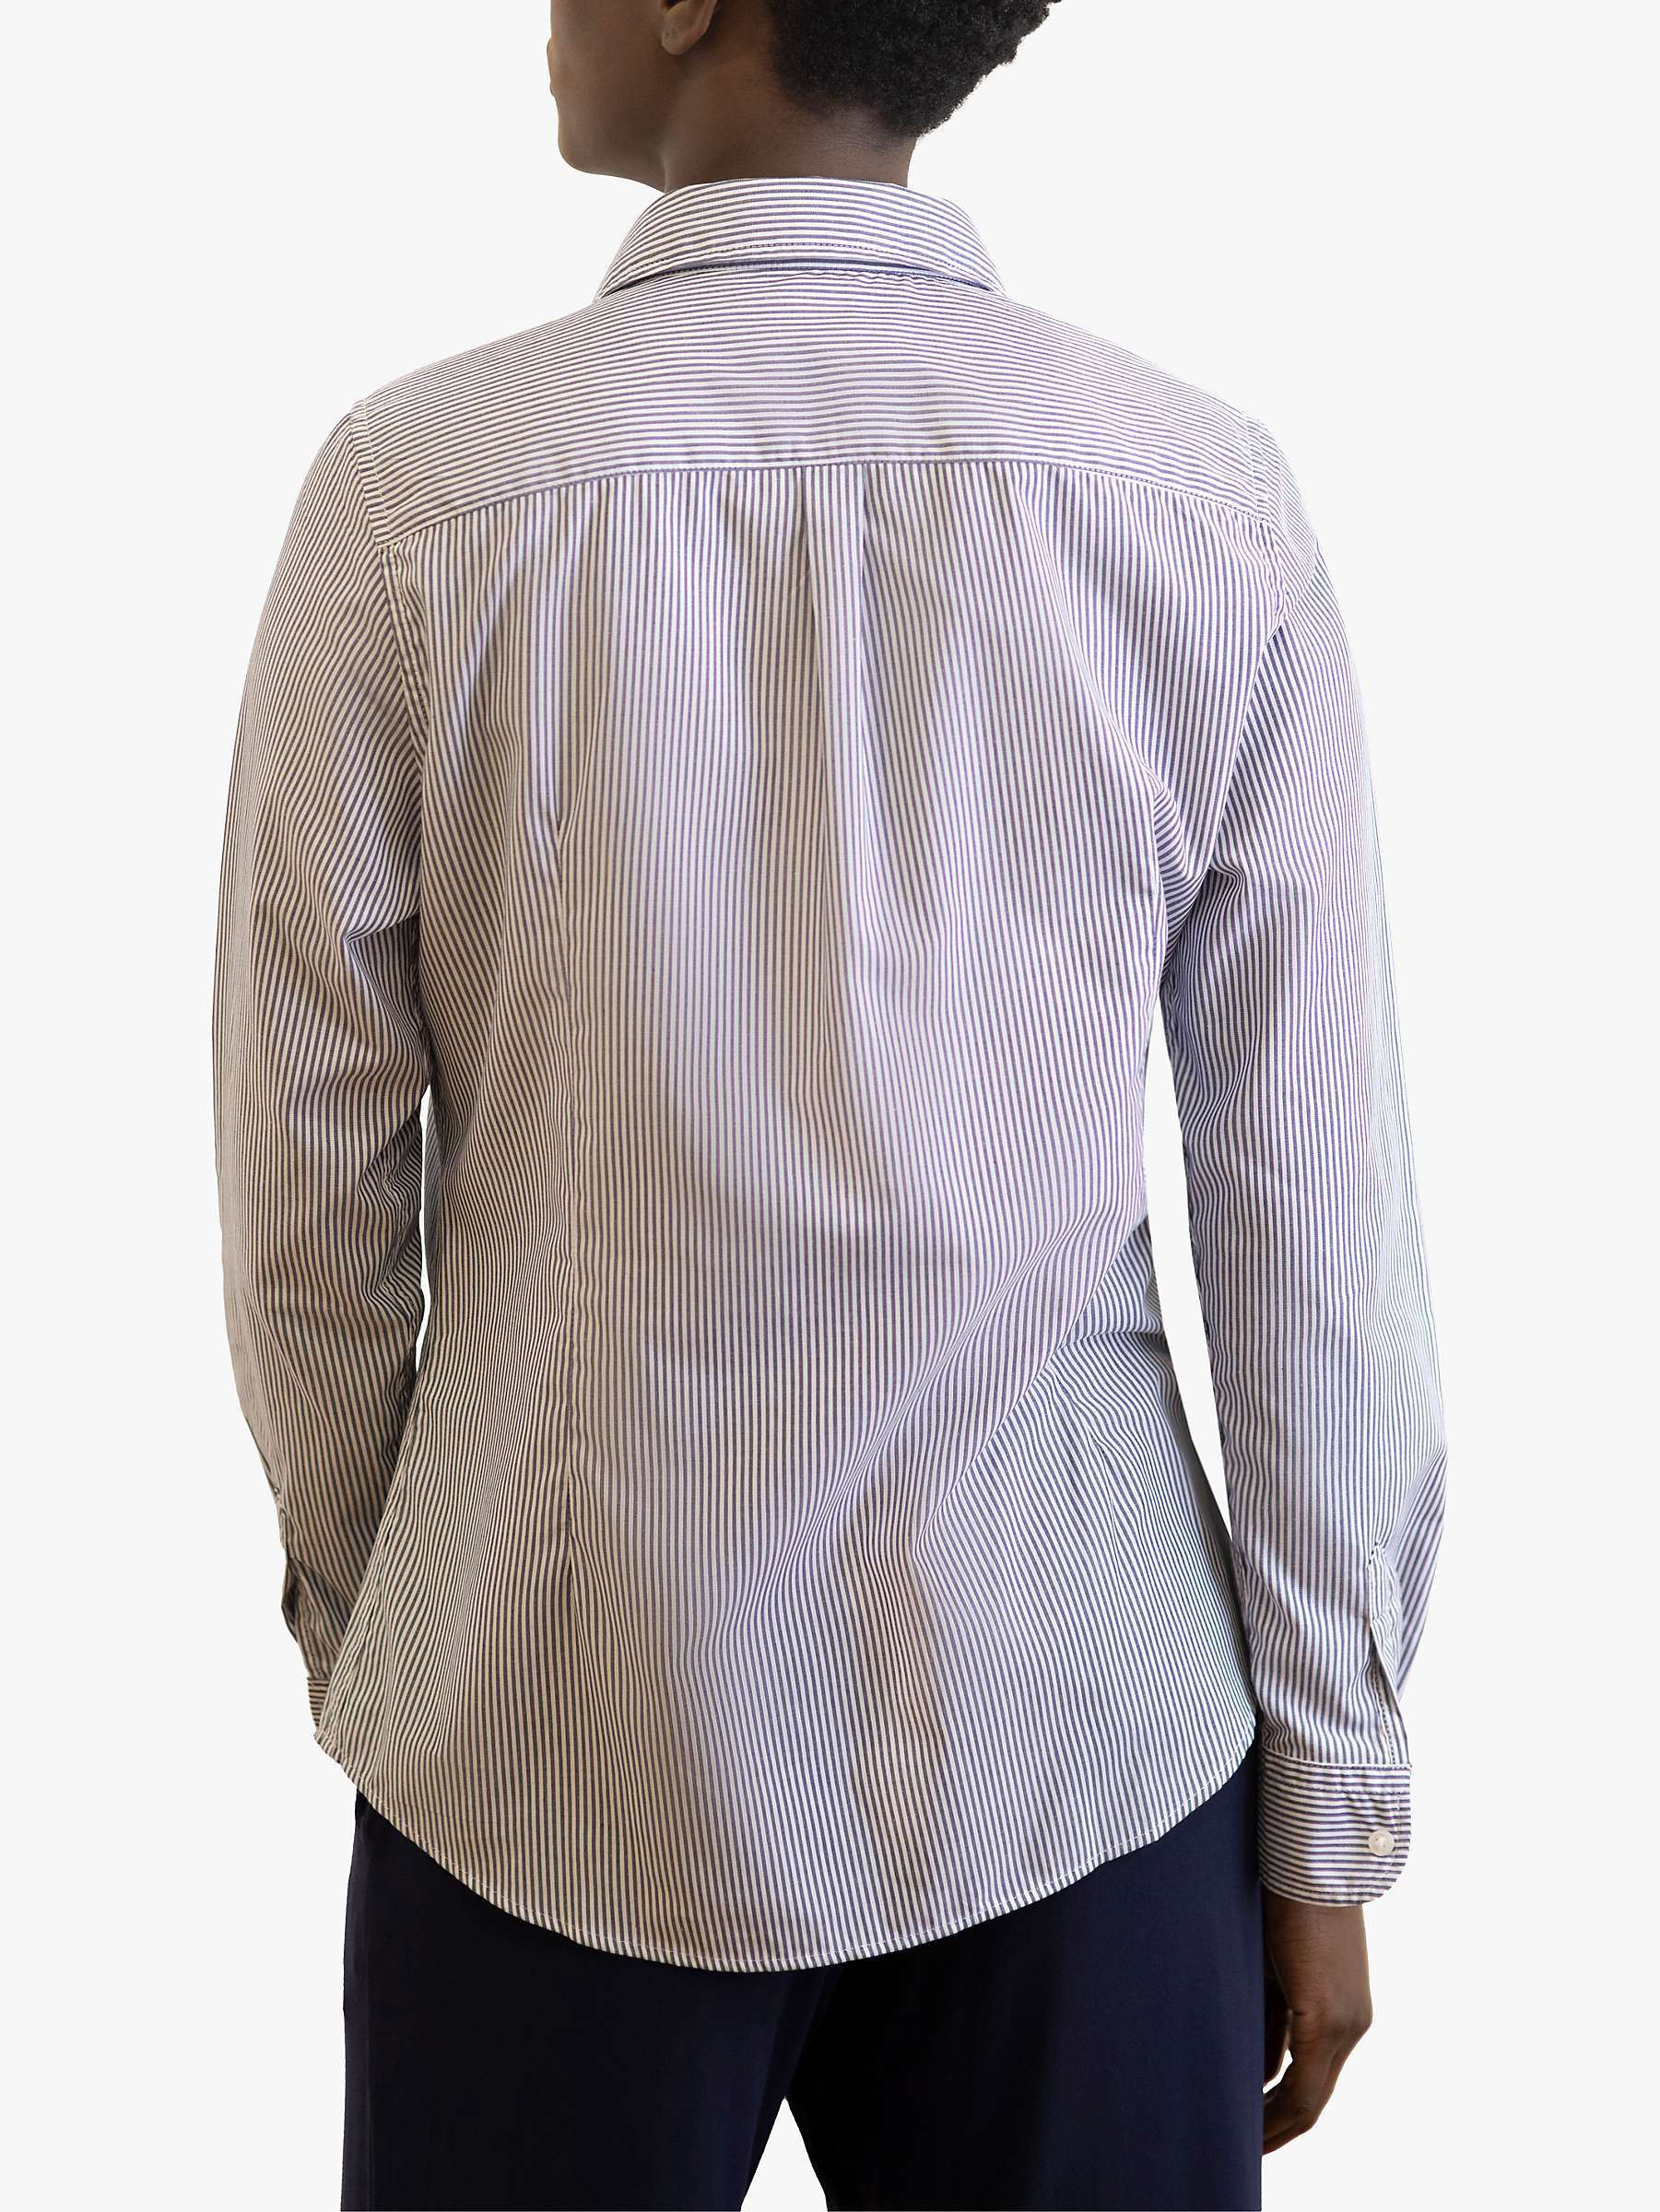 NRBY Simone Striped Shirt, Navy/White at John Lewis & Partners